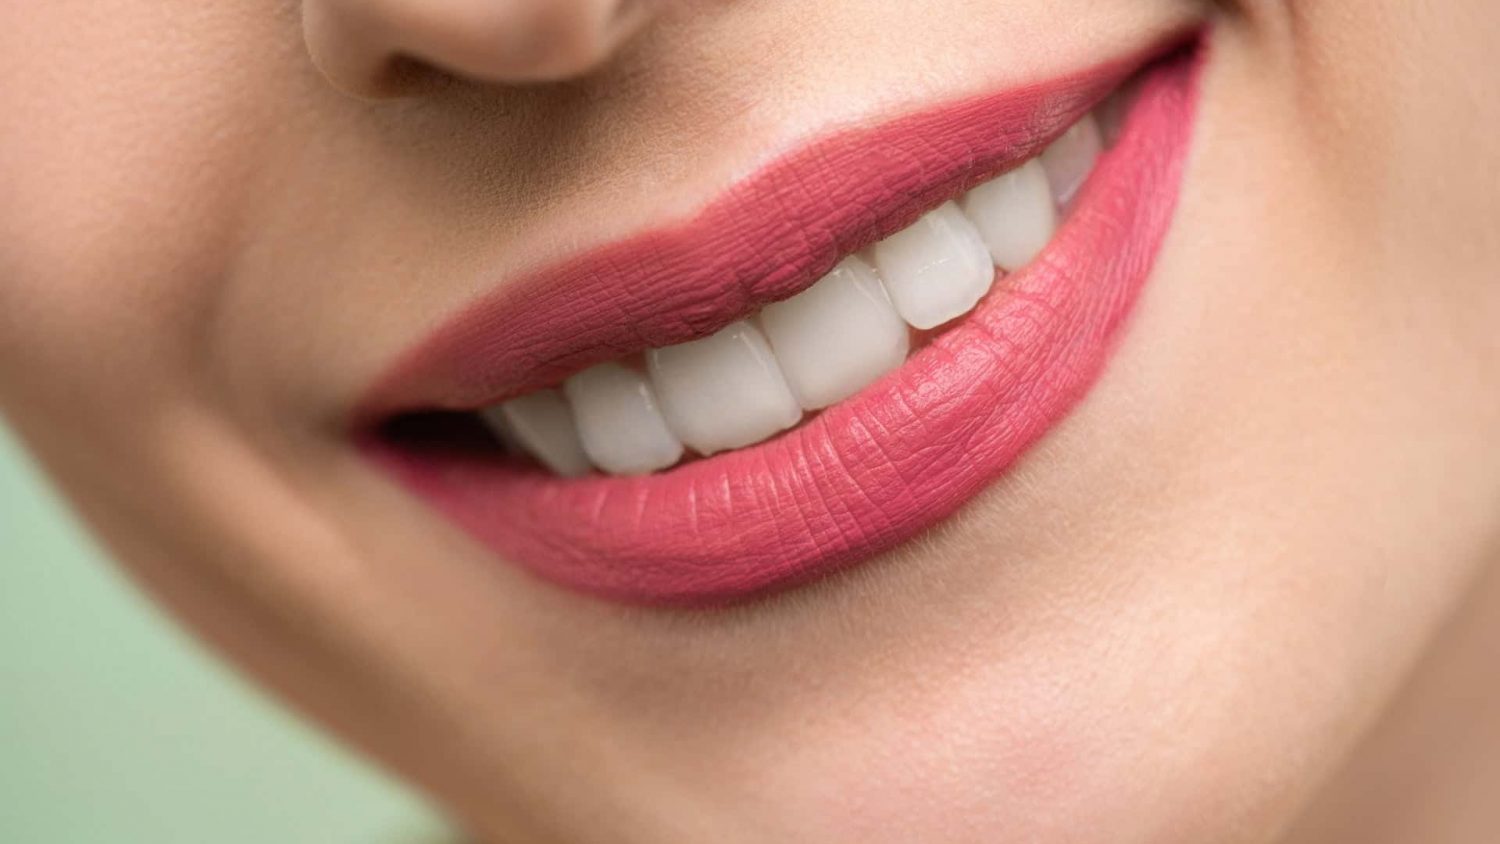 Best Teeth Whitening Kit – 6 Teeth Whitening Kits for a Stunning Smile